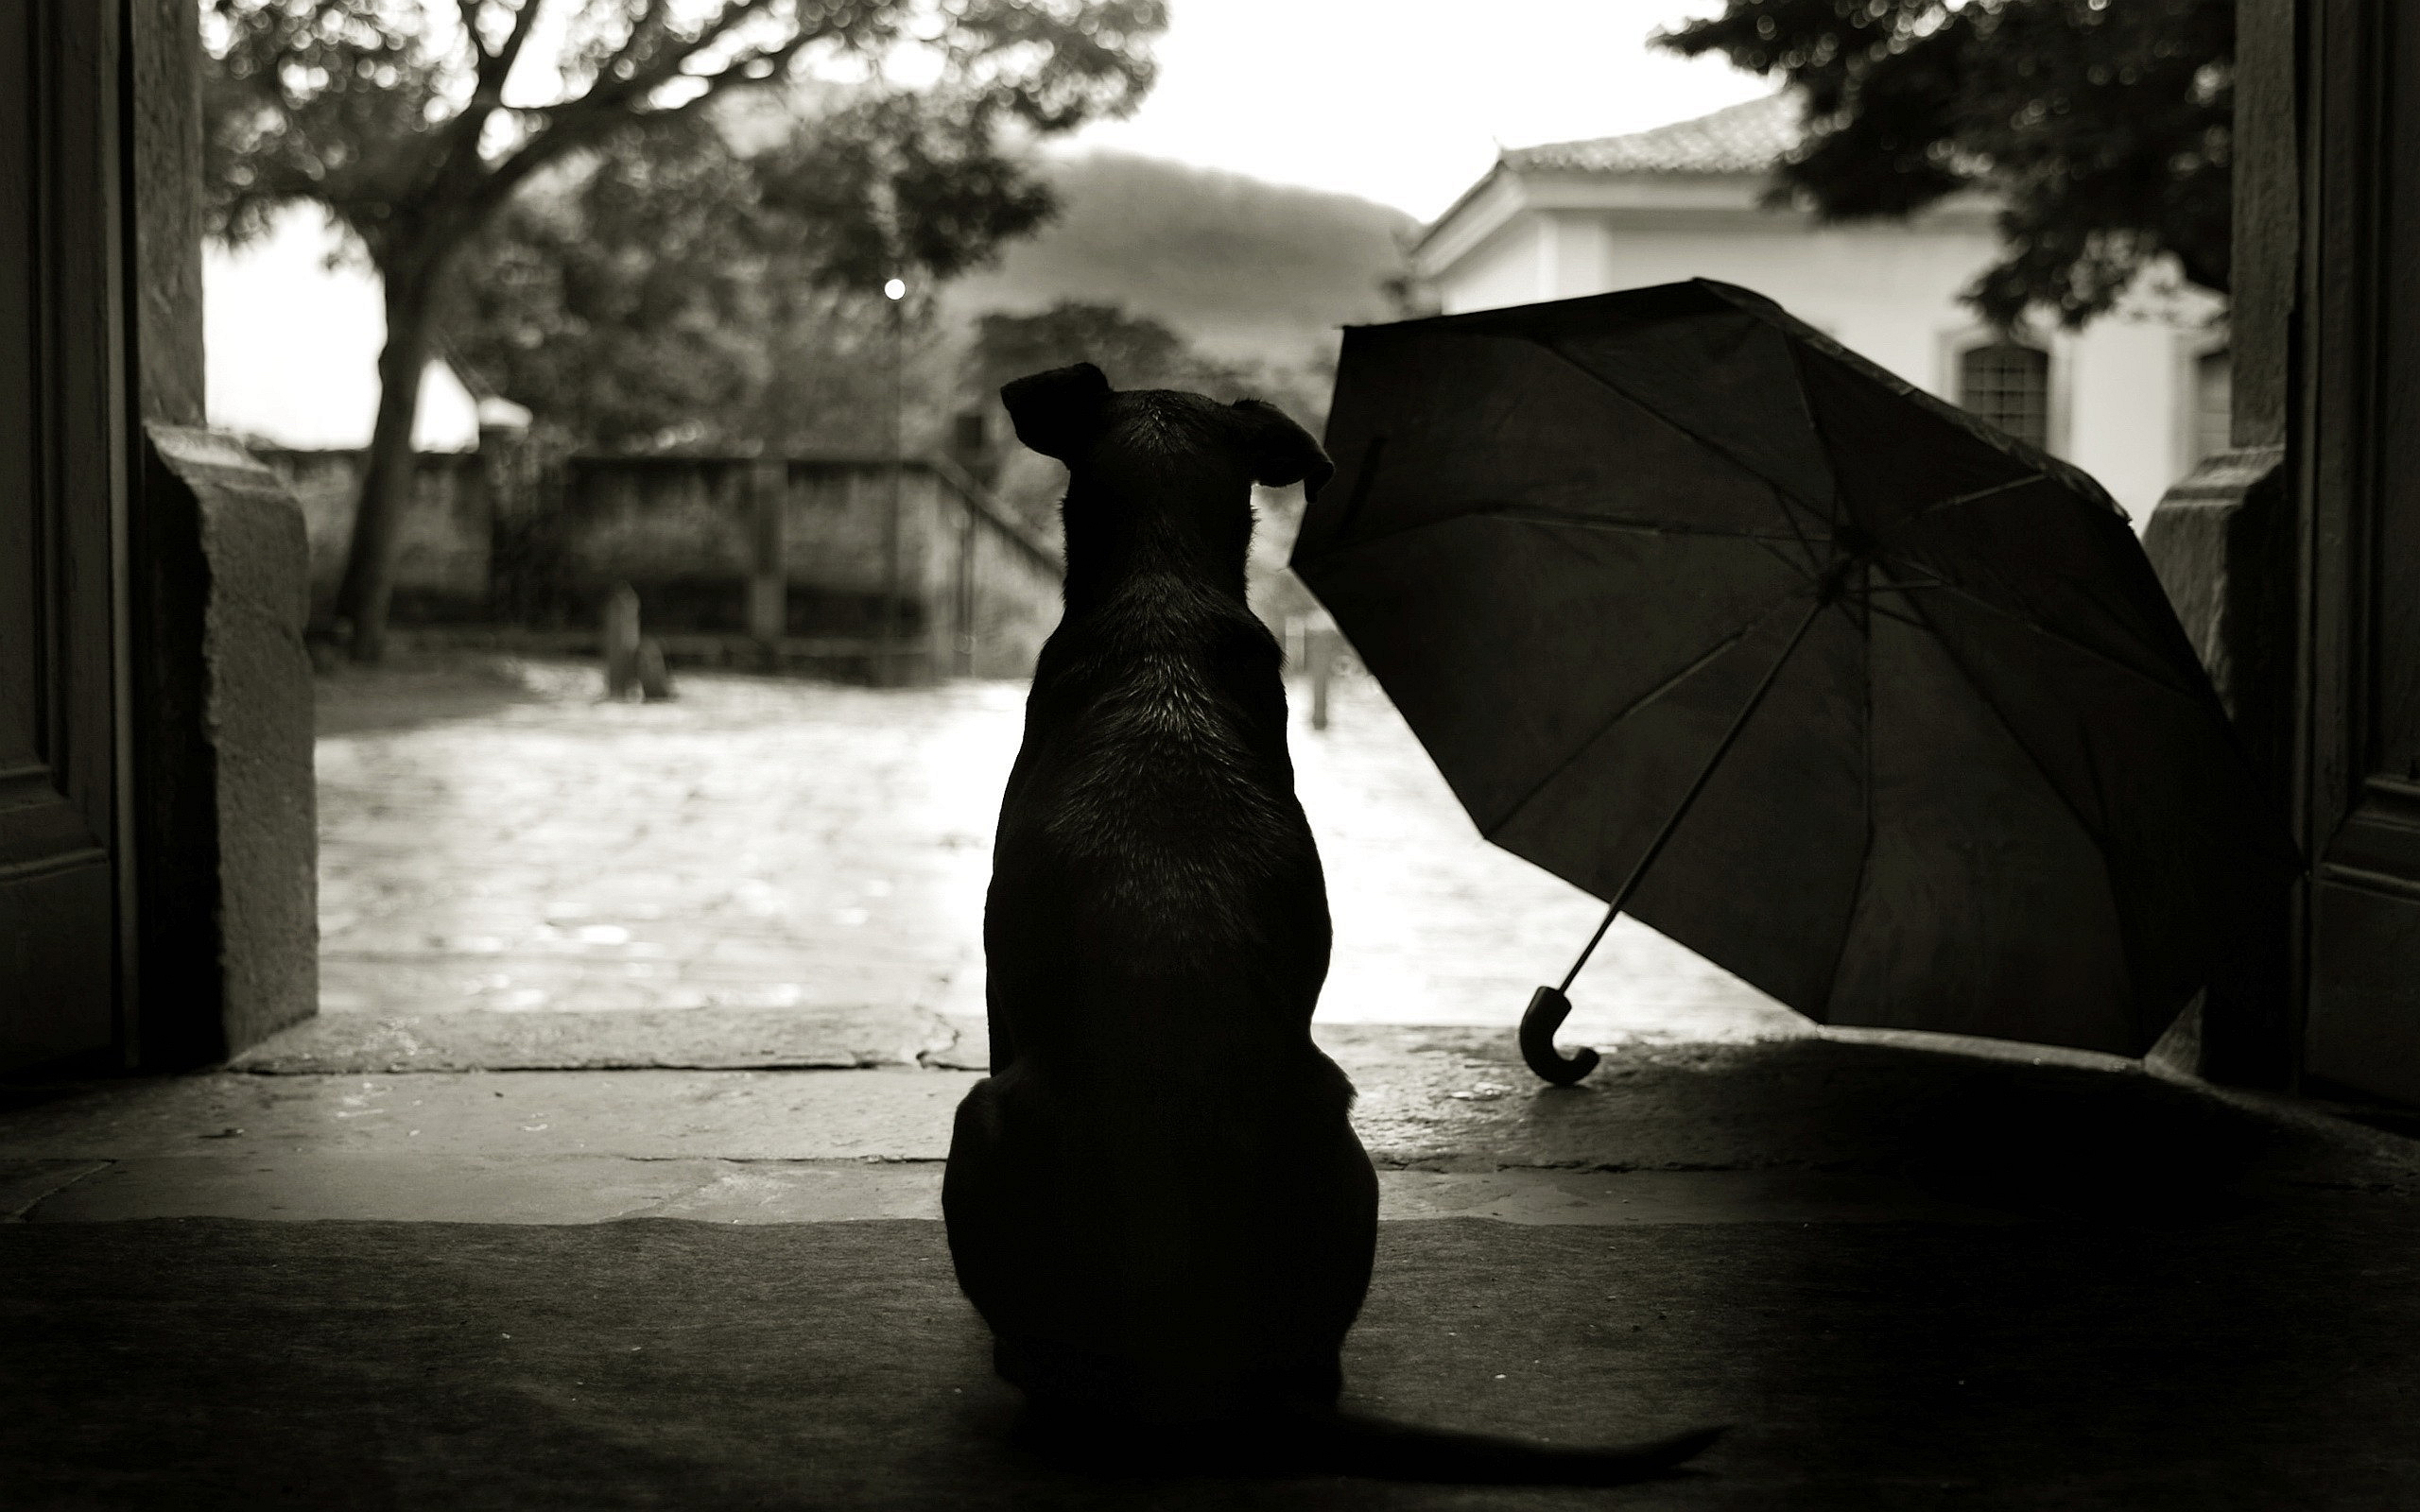 7 Indoor Dog Enrichment Ideas for Rainy Days